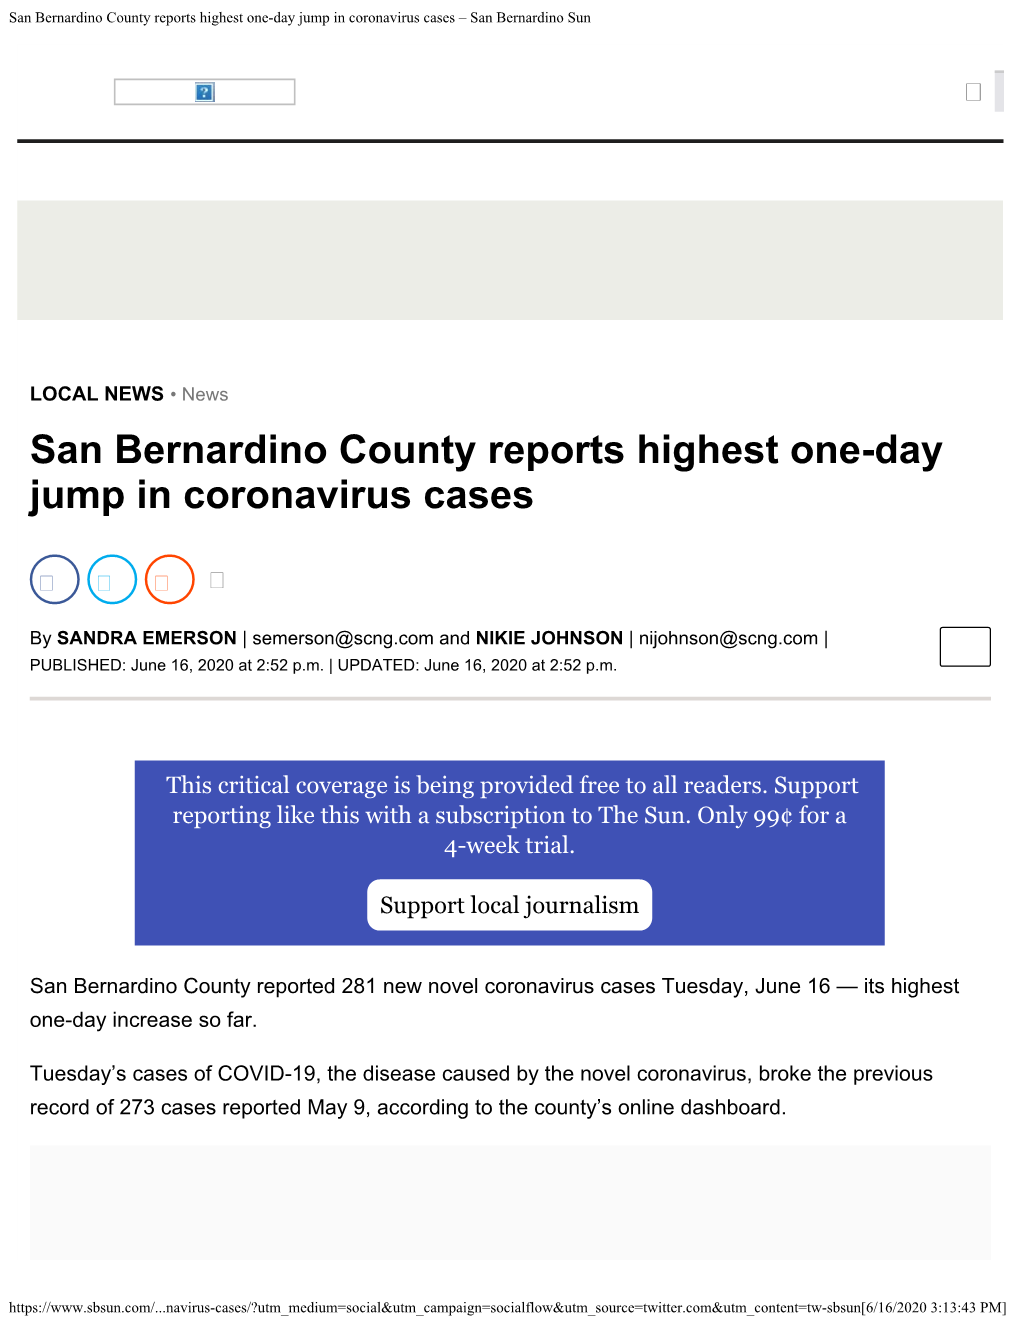 San Bernardino County Reports Highest One-Day Jump in Coronavirus Cases – San Bernardino Sun